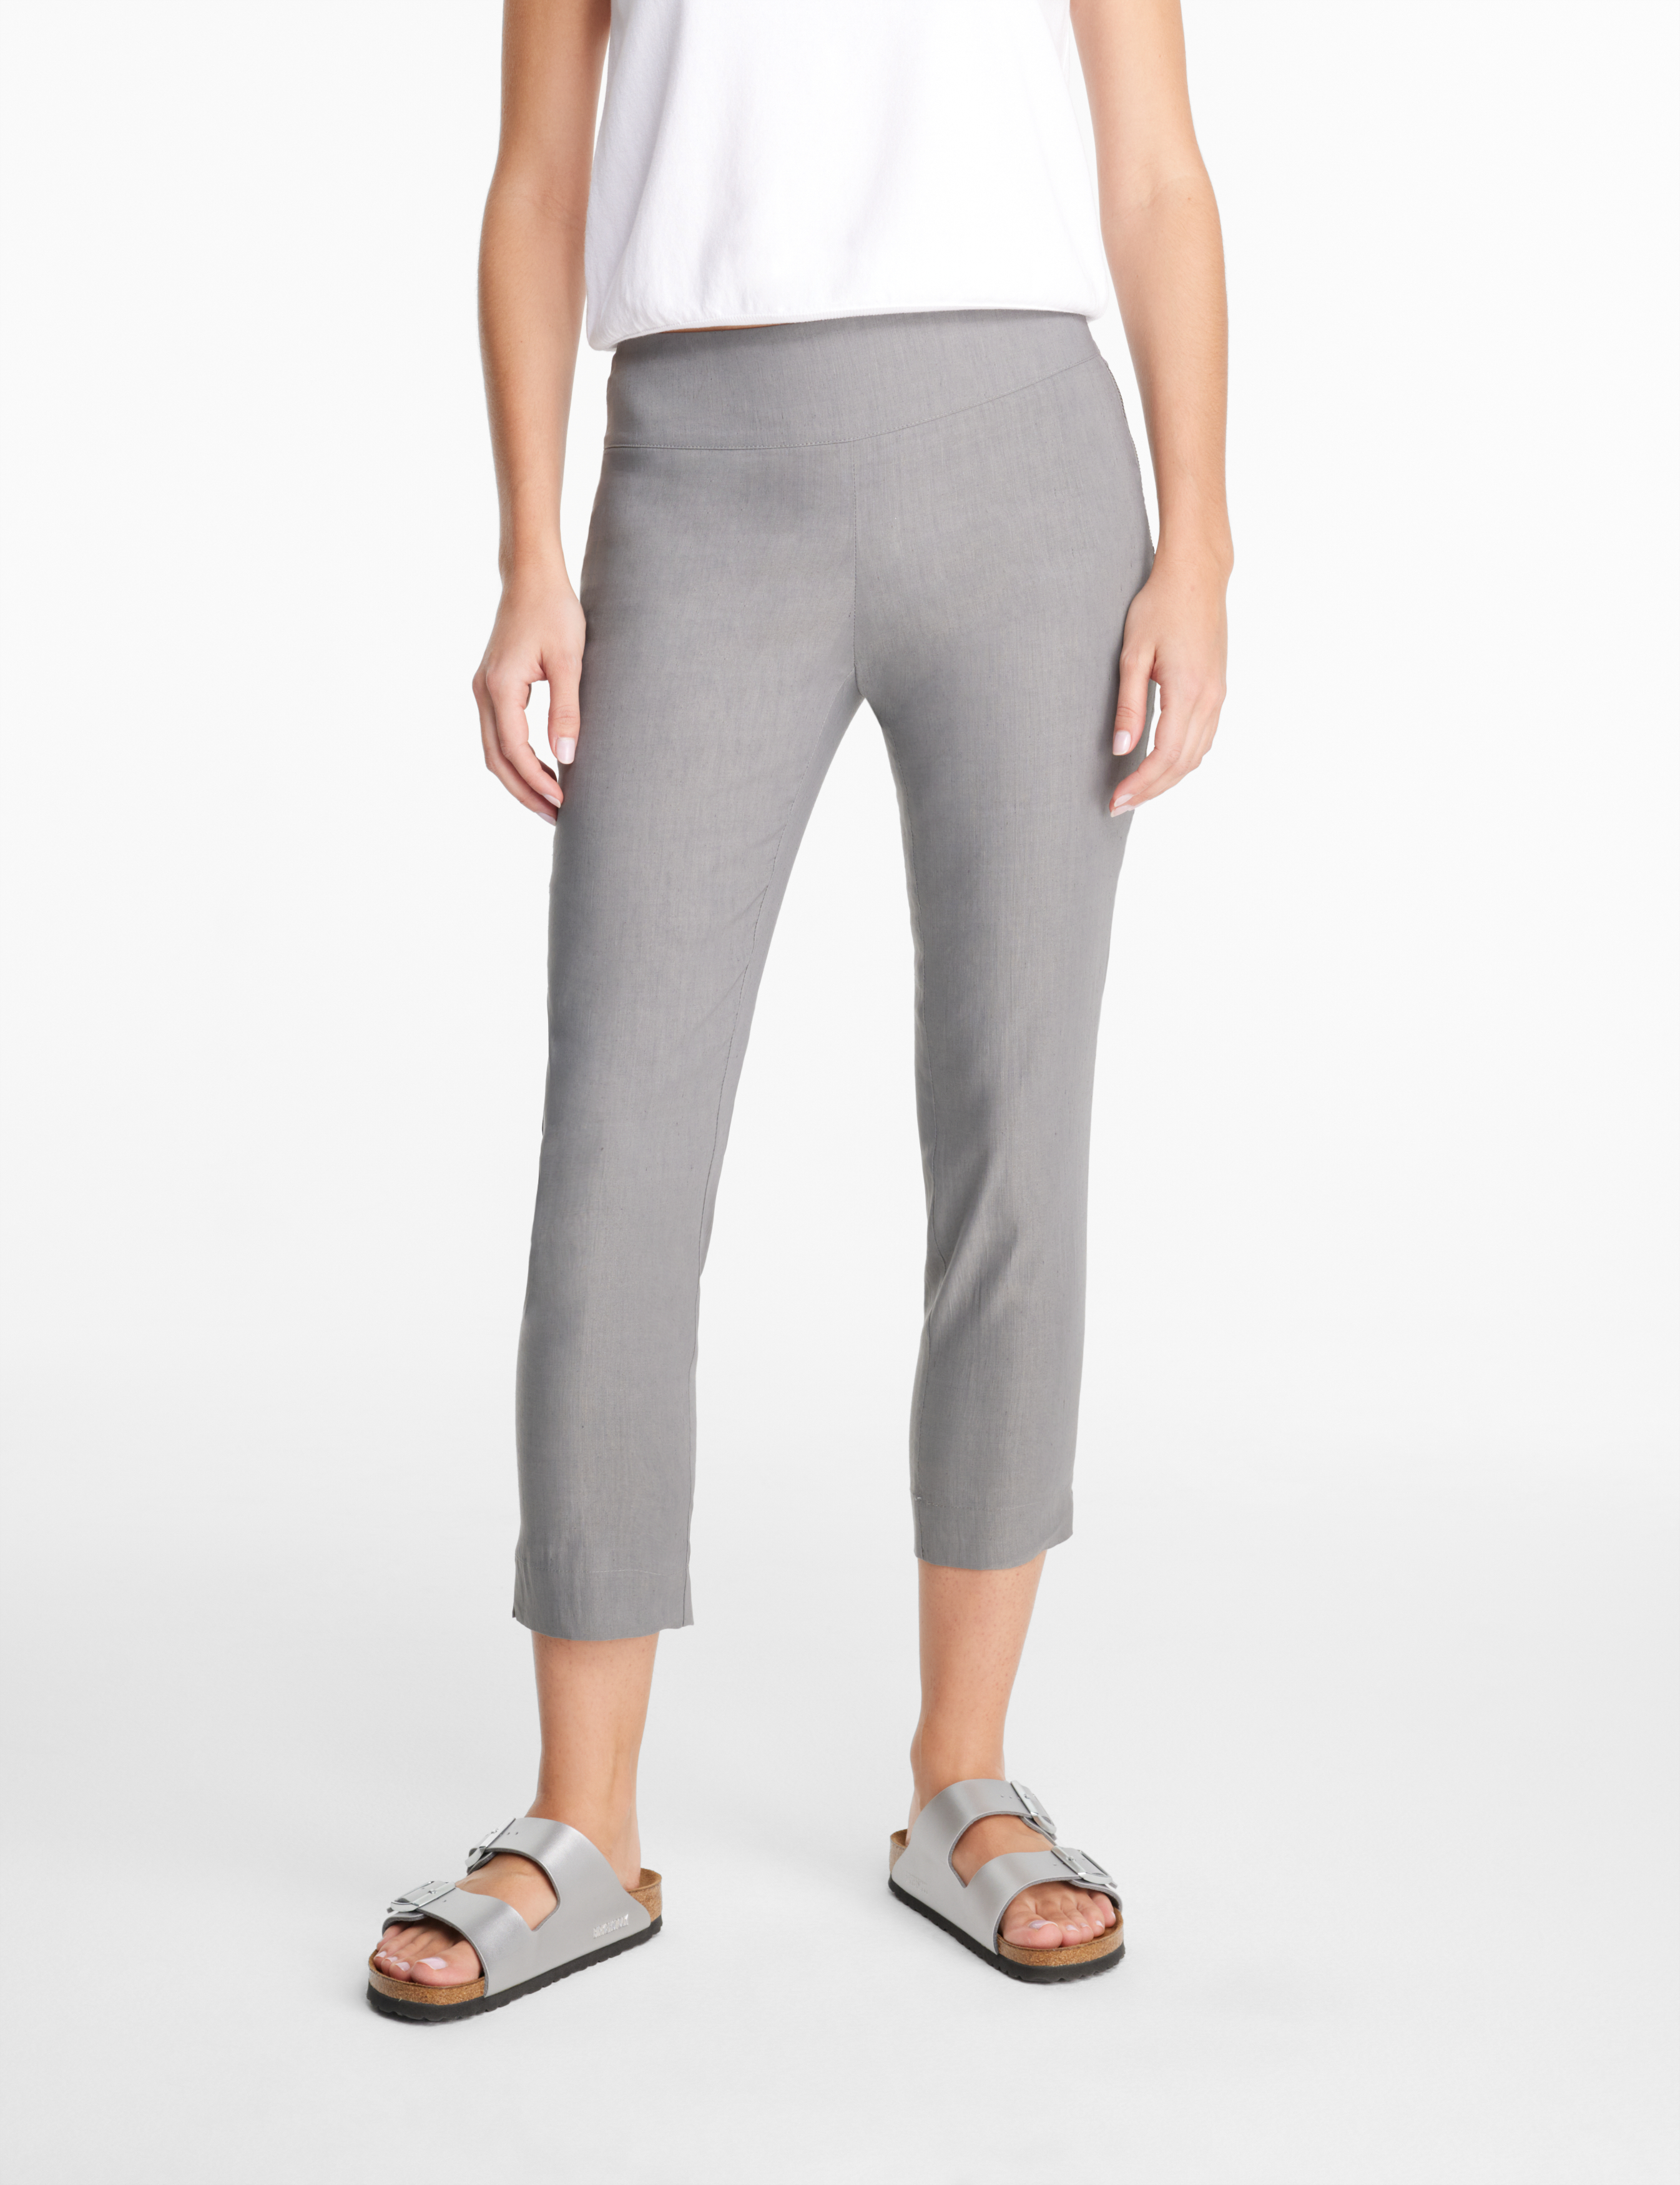 Grey cropped pants - drawstring cuffs by Sarah Pacini